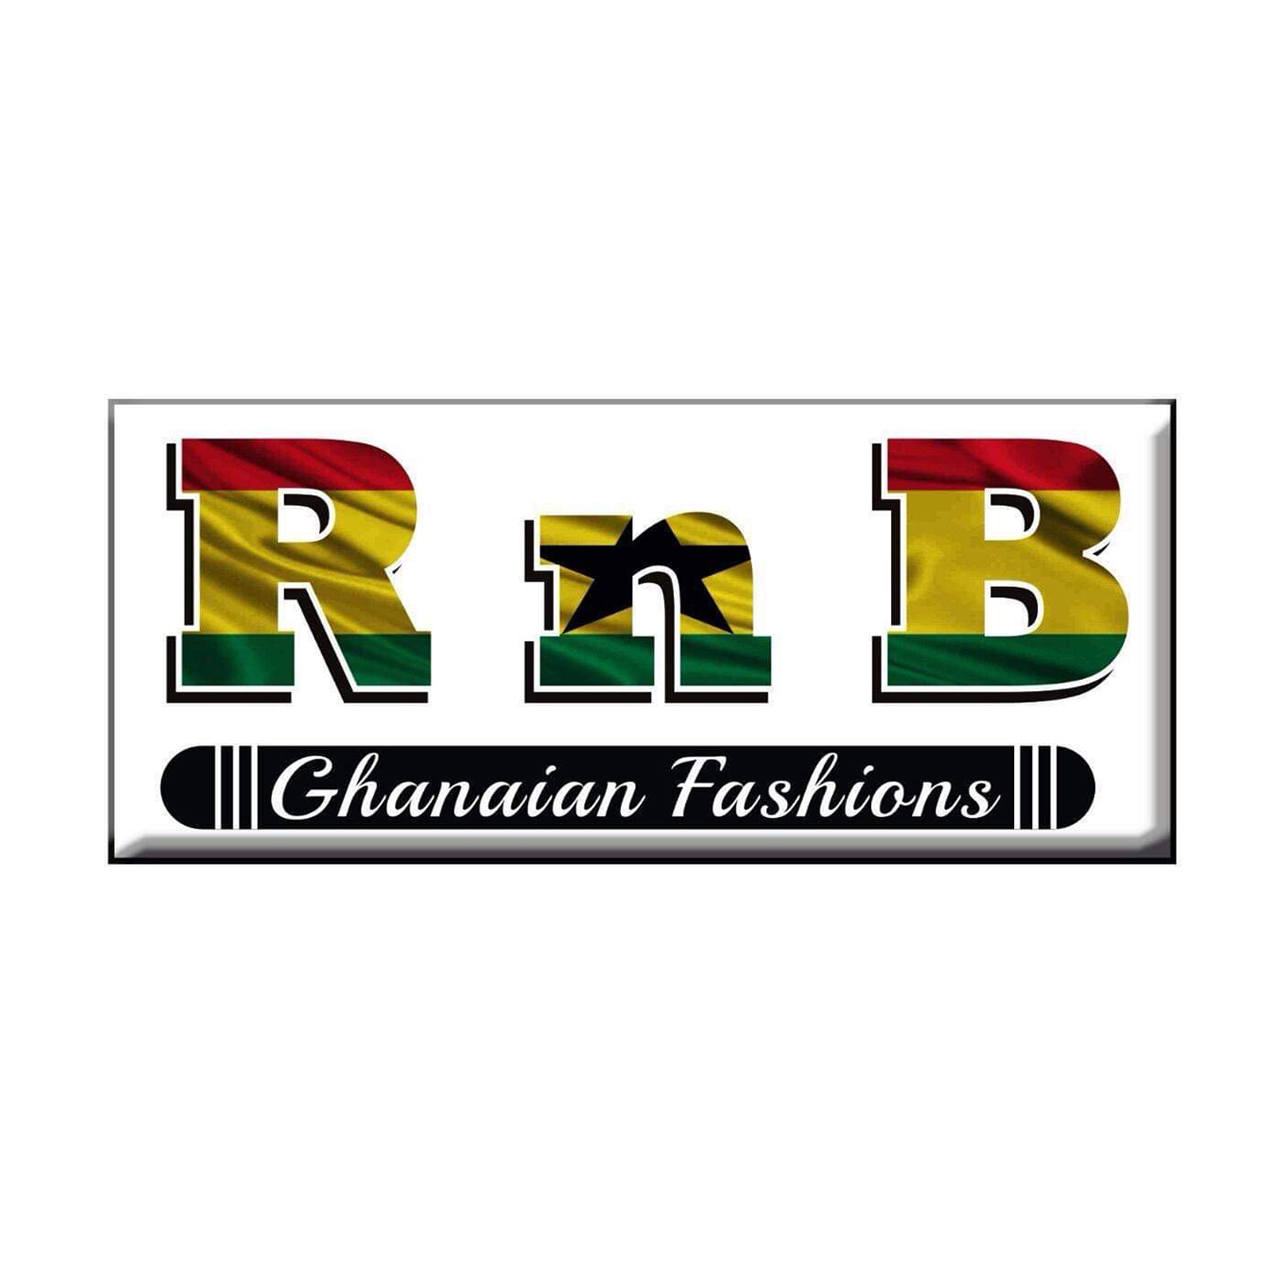 RnB Ghanaian Fashions